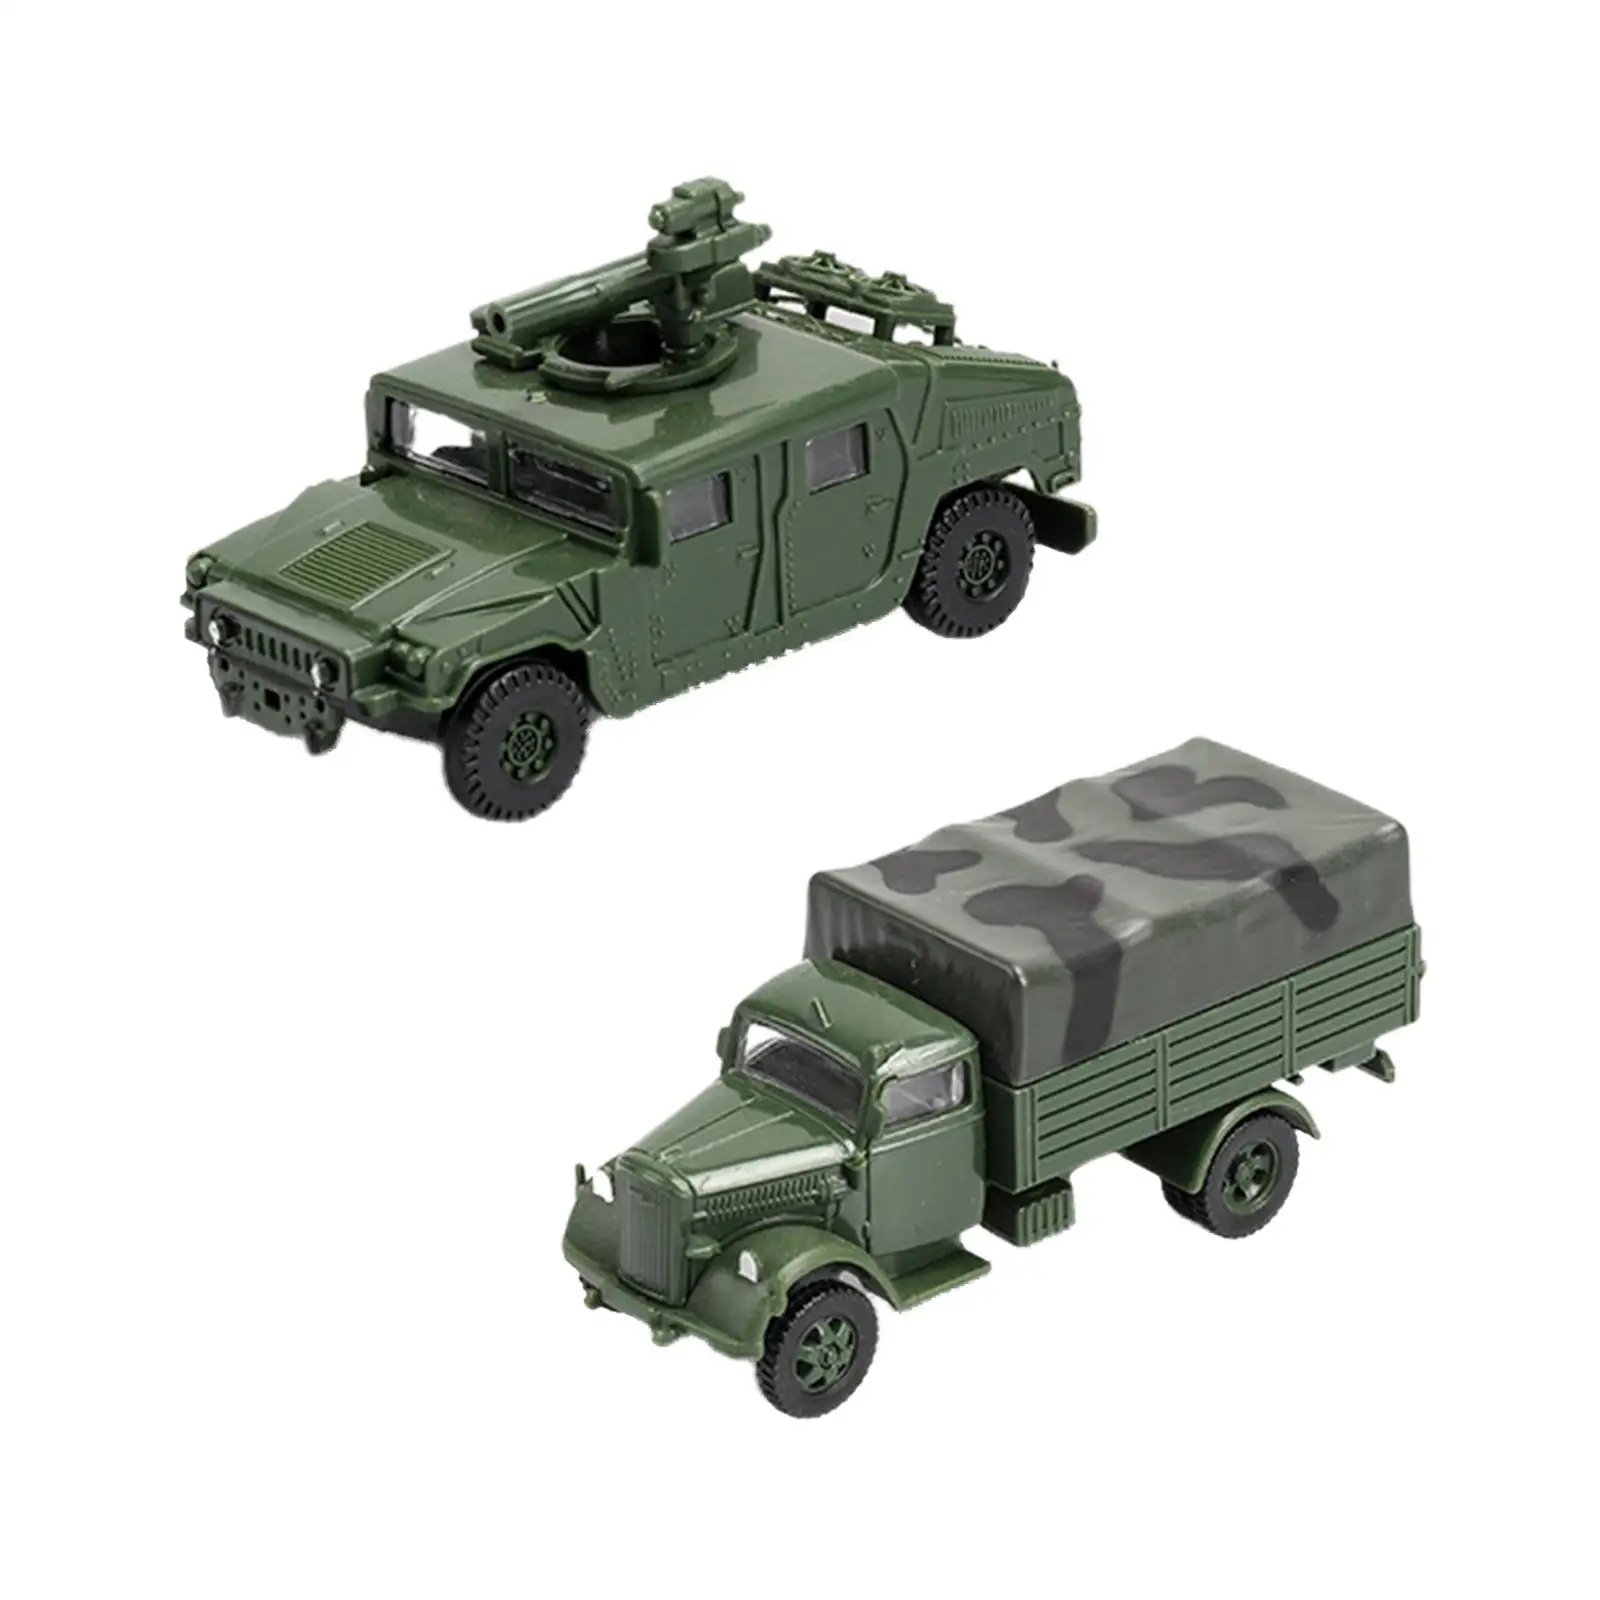 2x 1:72 Assemble American Humvee Kits Model Toys for Tabletop Decor Men Gift